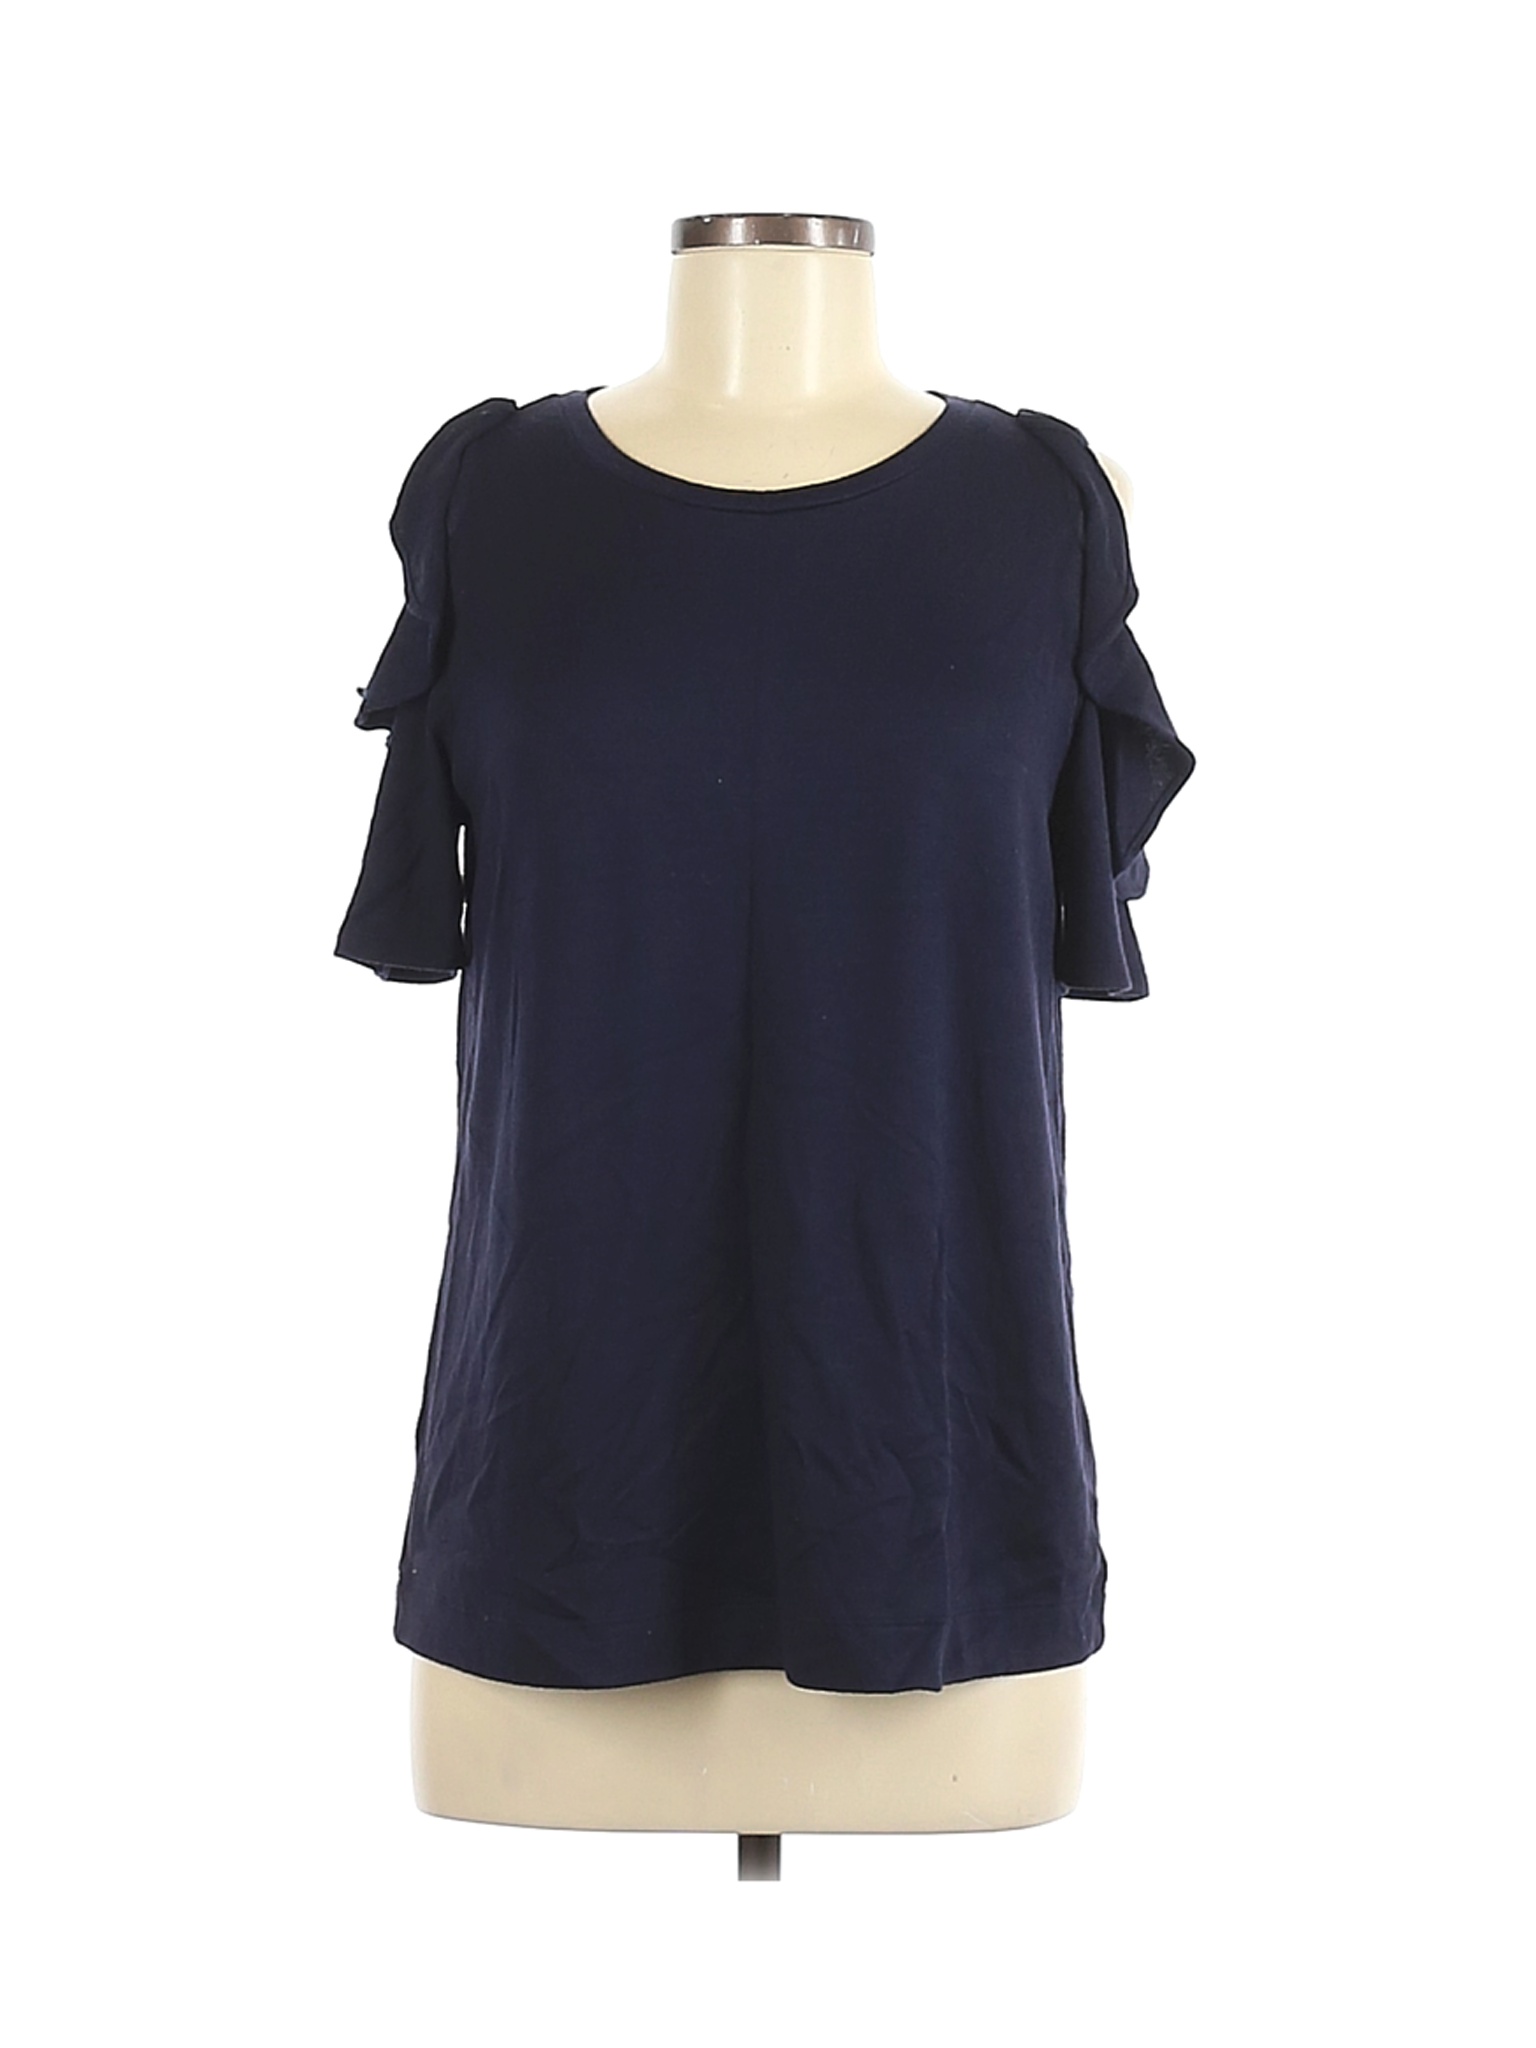 Ann Taylor LOFT Women Blue Short Sleeve Top M | eBay